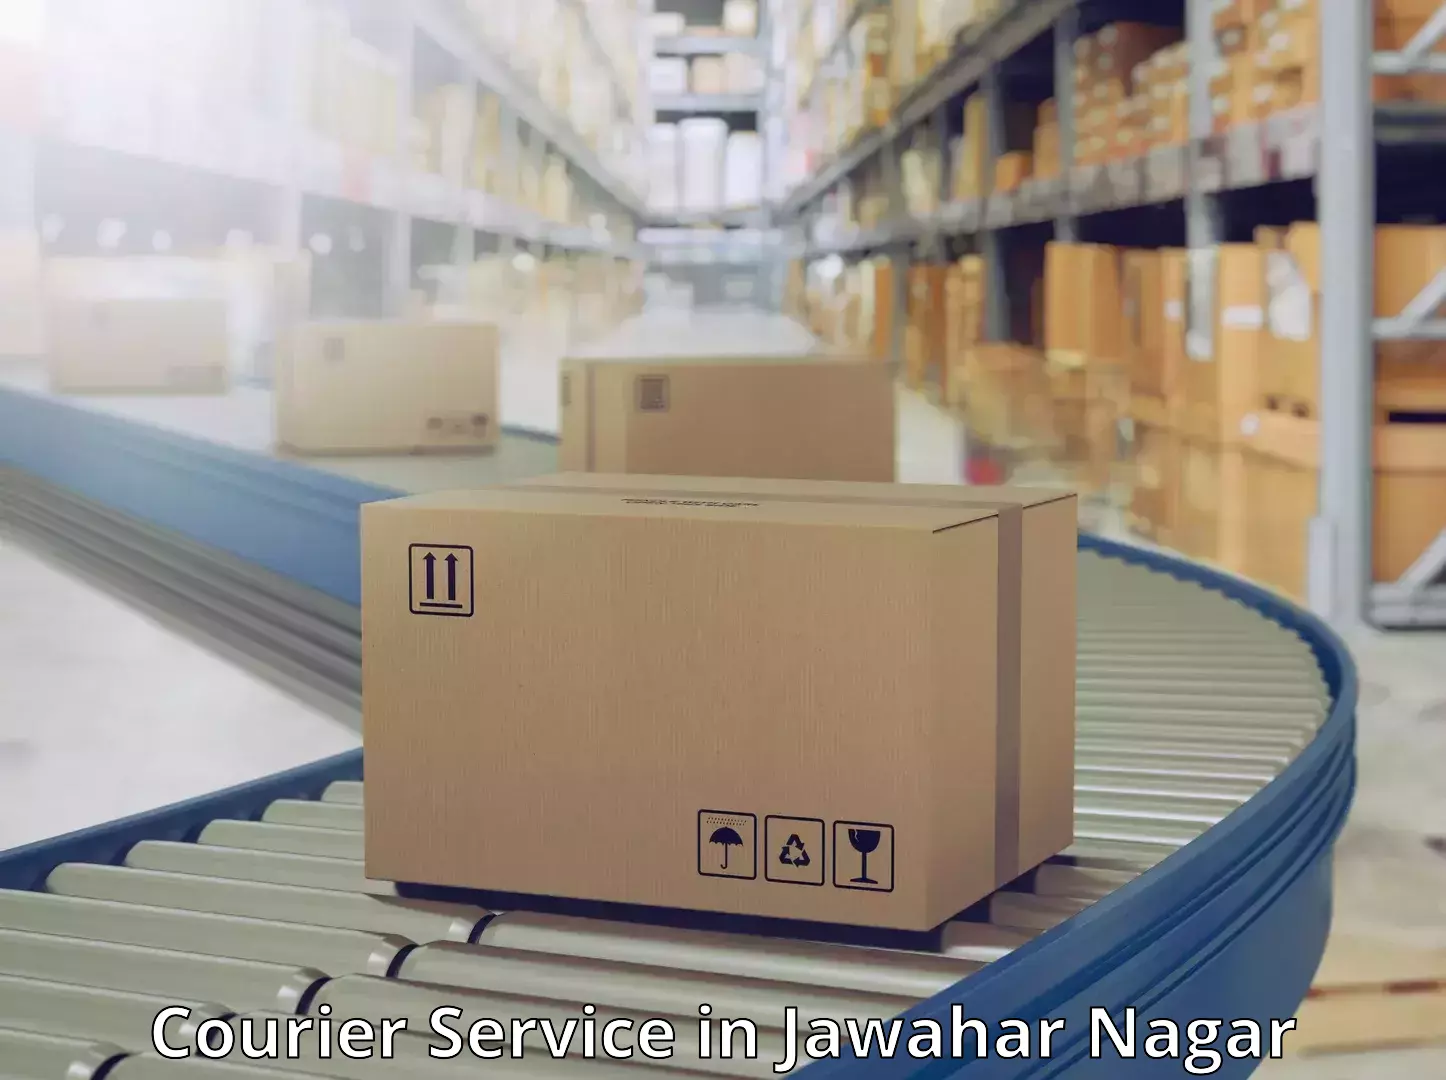 Secure package delivery in Jawahar Nagar